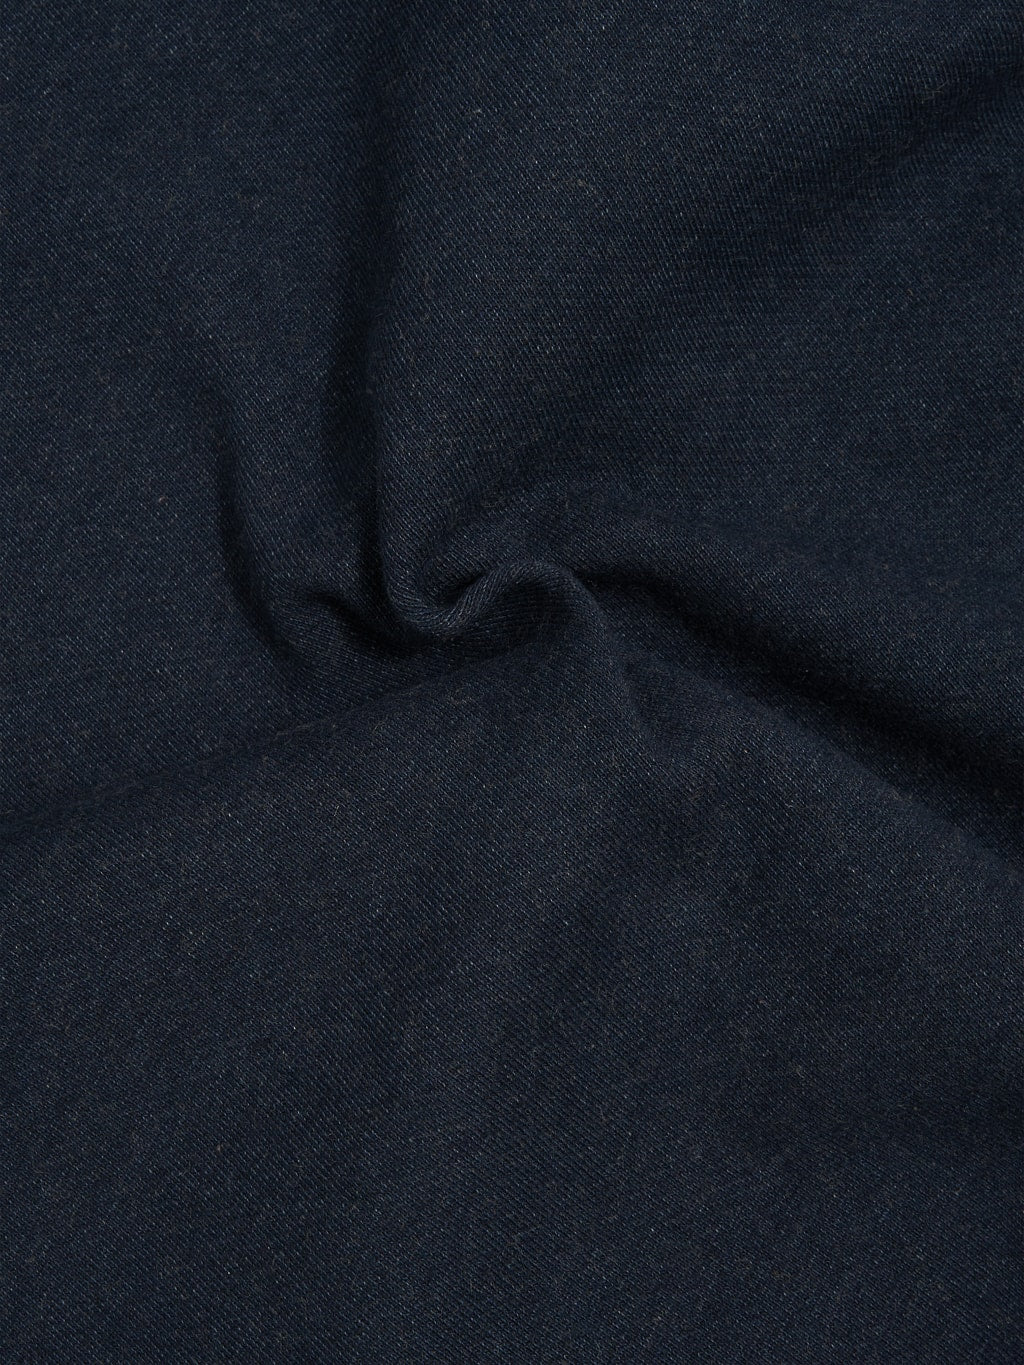 studio dartisan aishibu dyed indigo sweatshirt texture